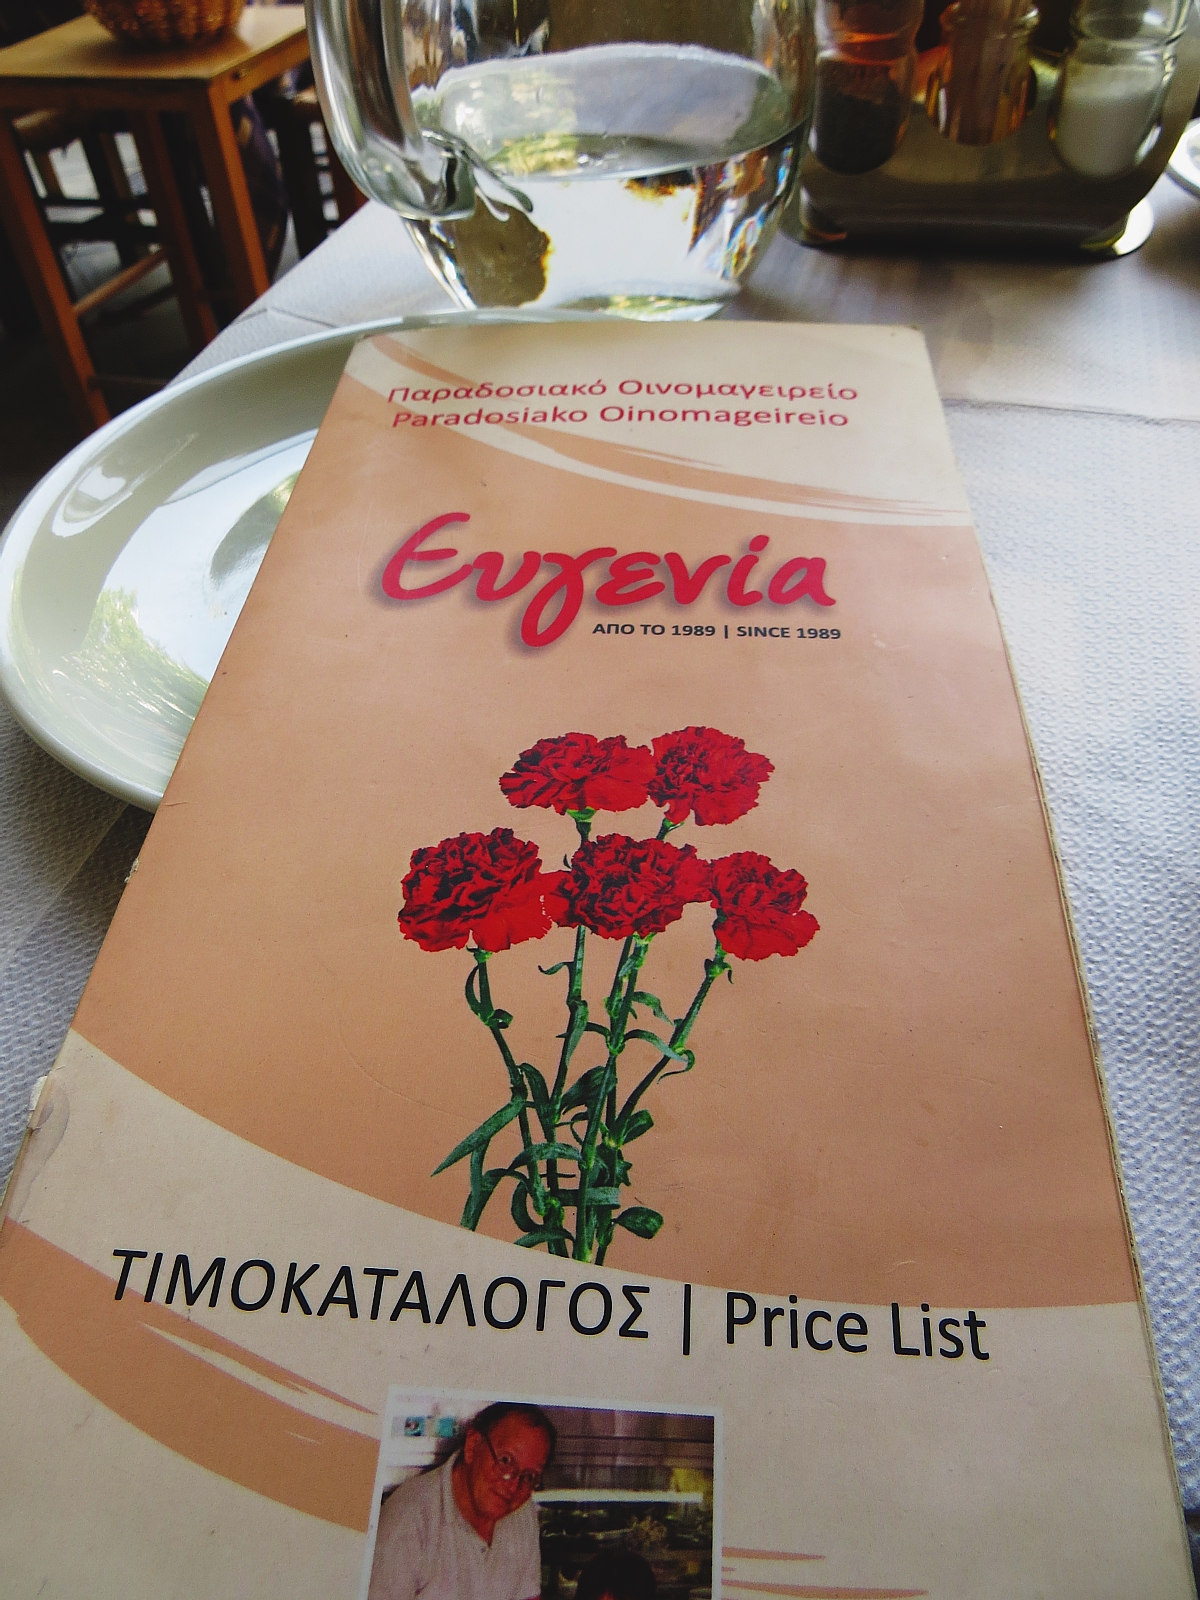 My Favorite Greek Restaurant-Eugenia (Paradosiako Cafeneion) In Athens